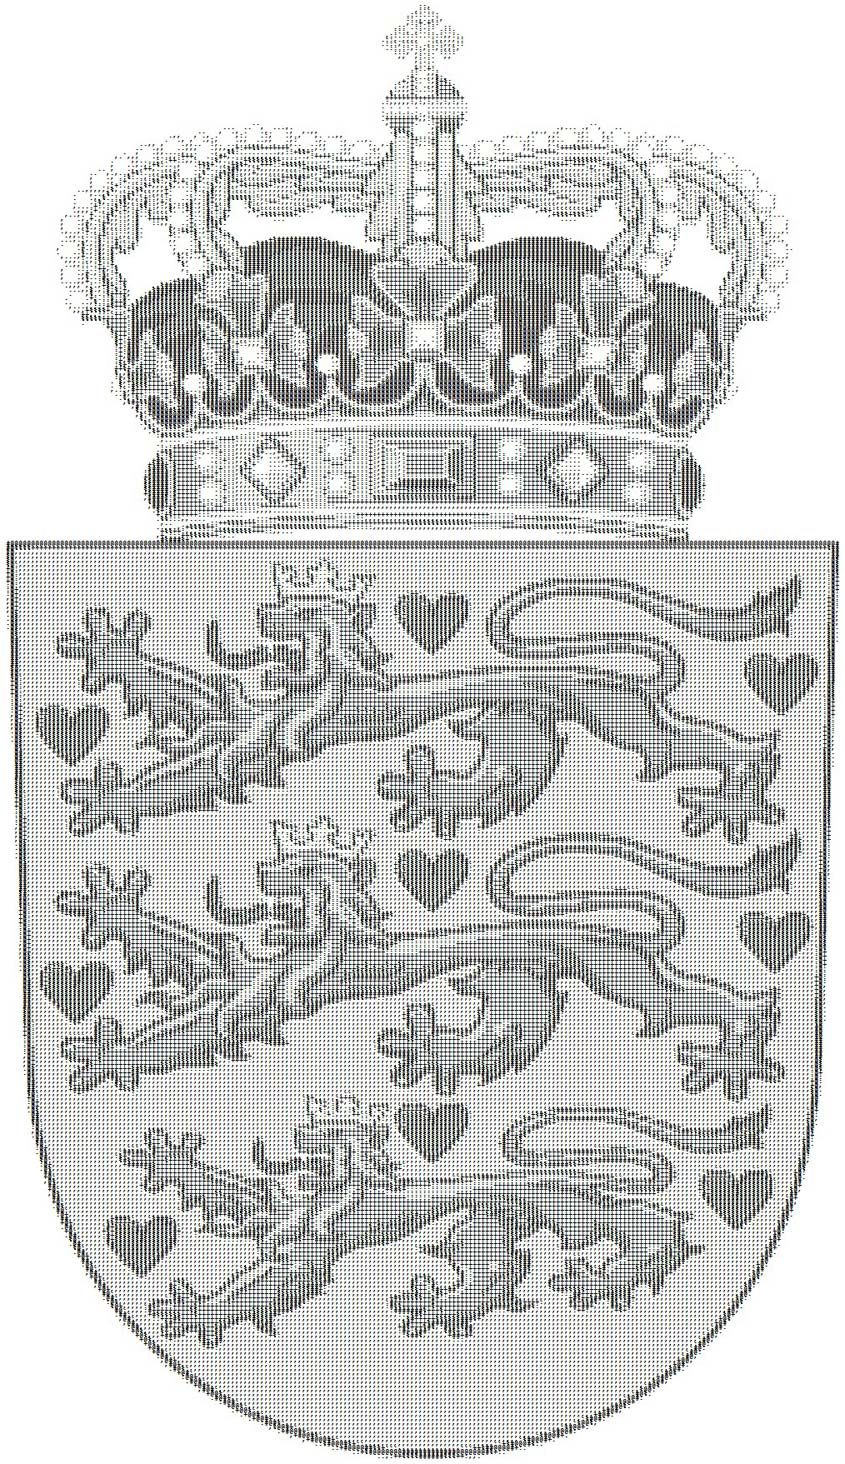 Wappen Dänemark als ASCII-Bild